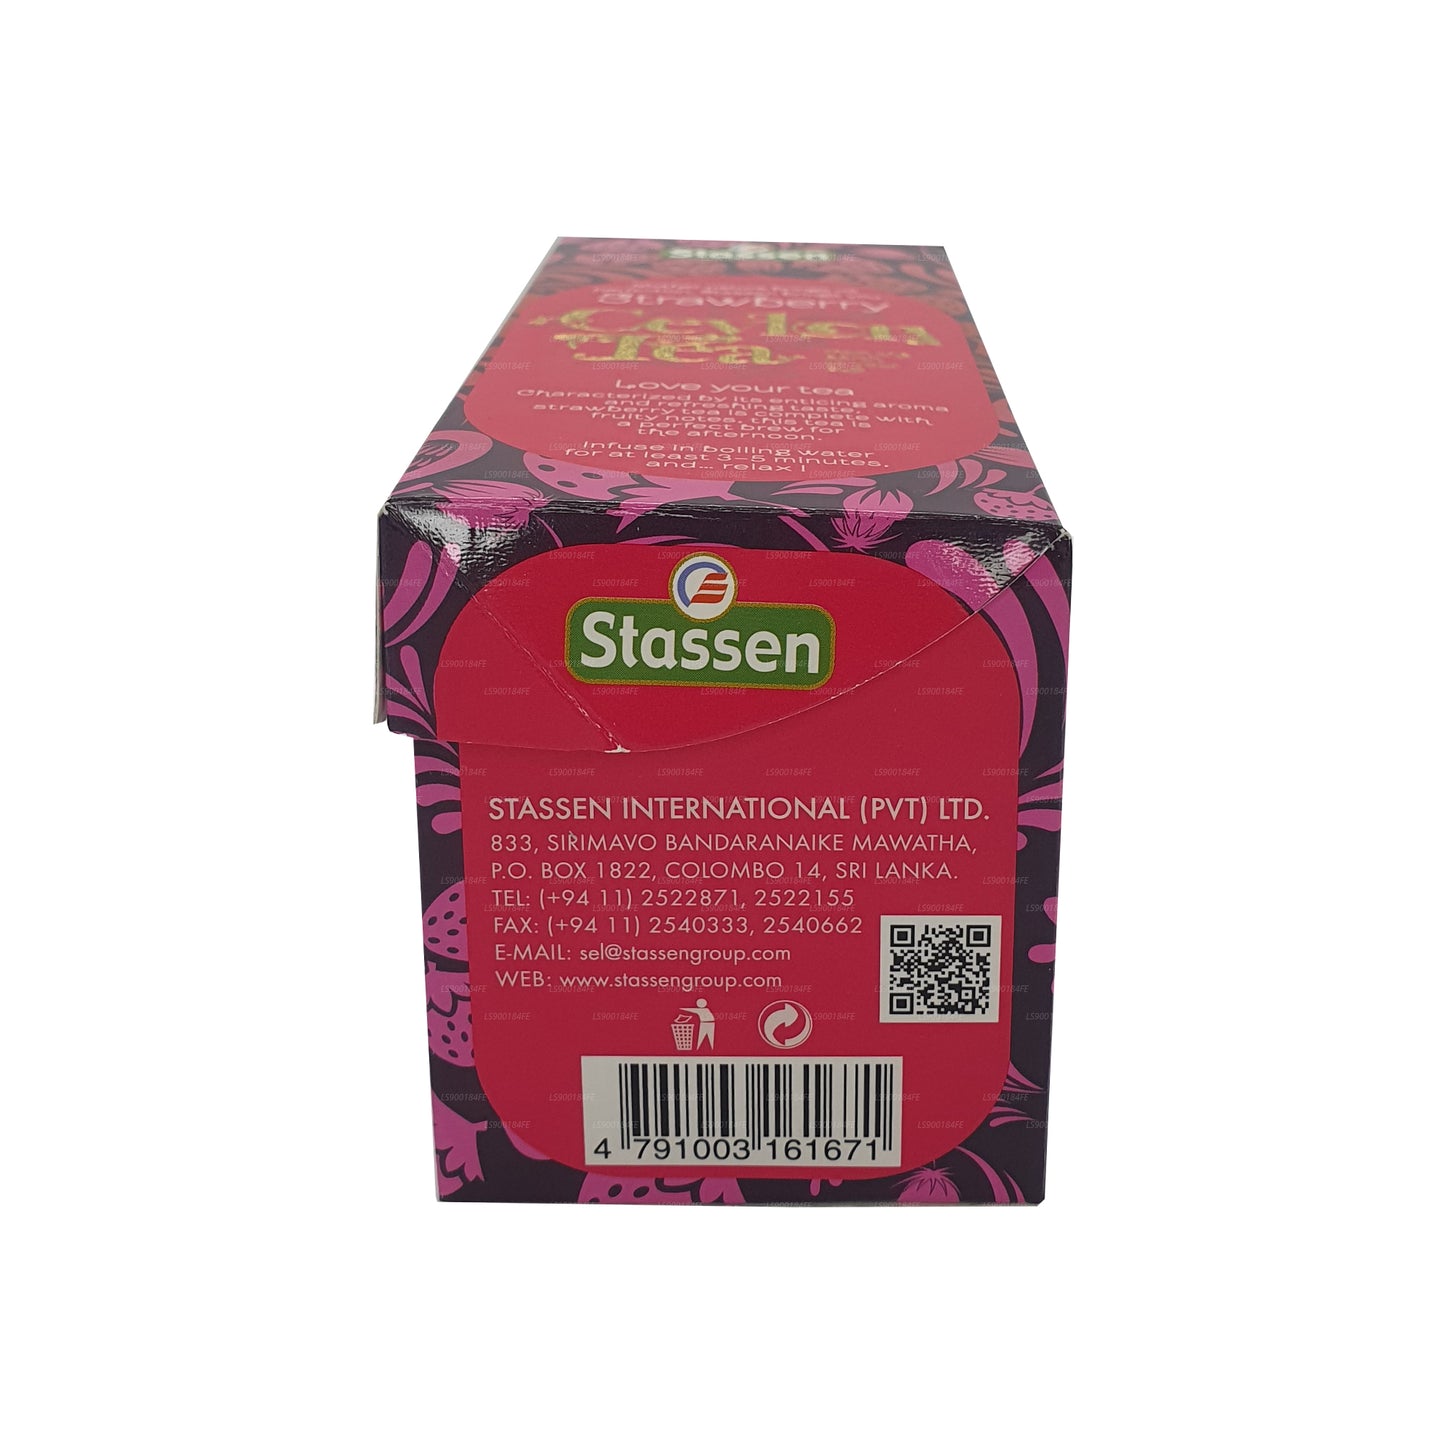 Stassen Strawberry Tea (37,5 g) 25 teposer